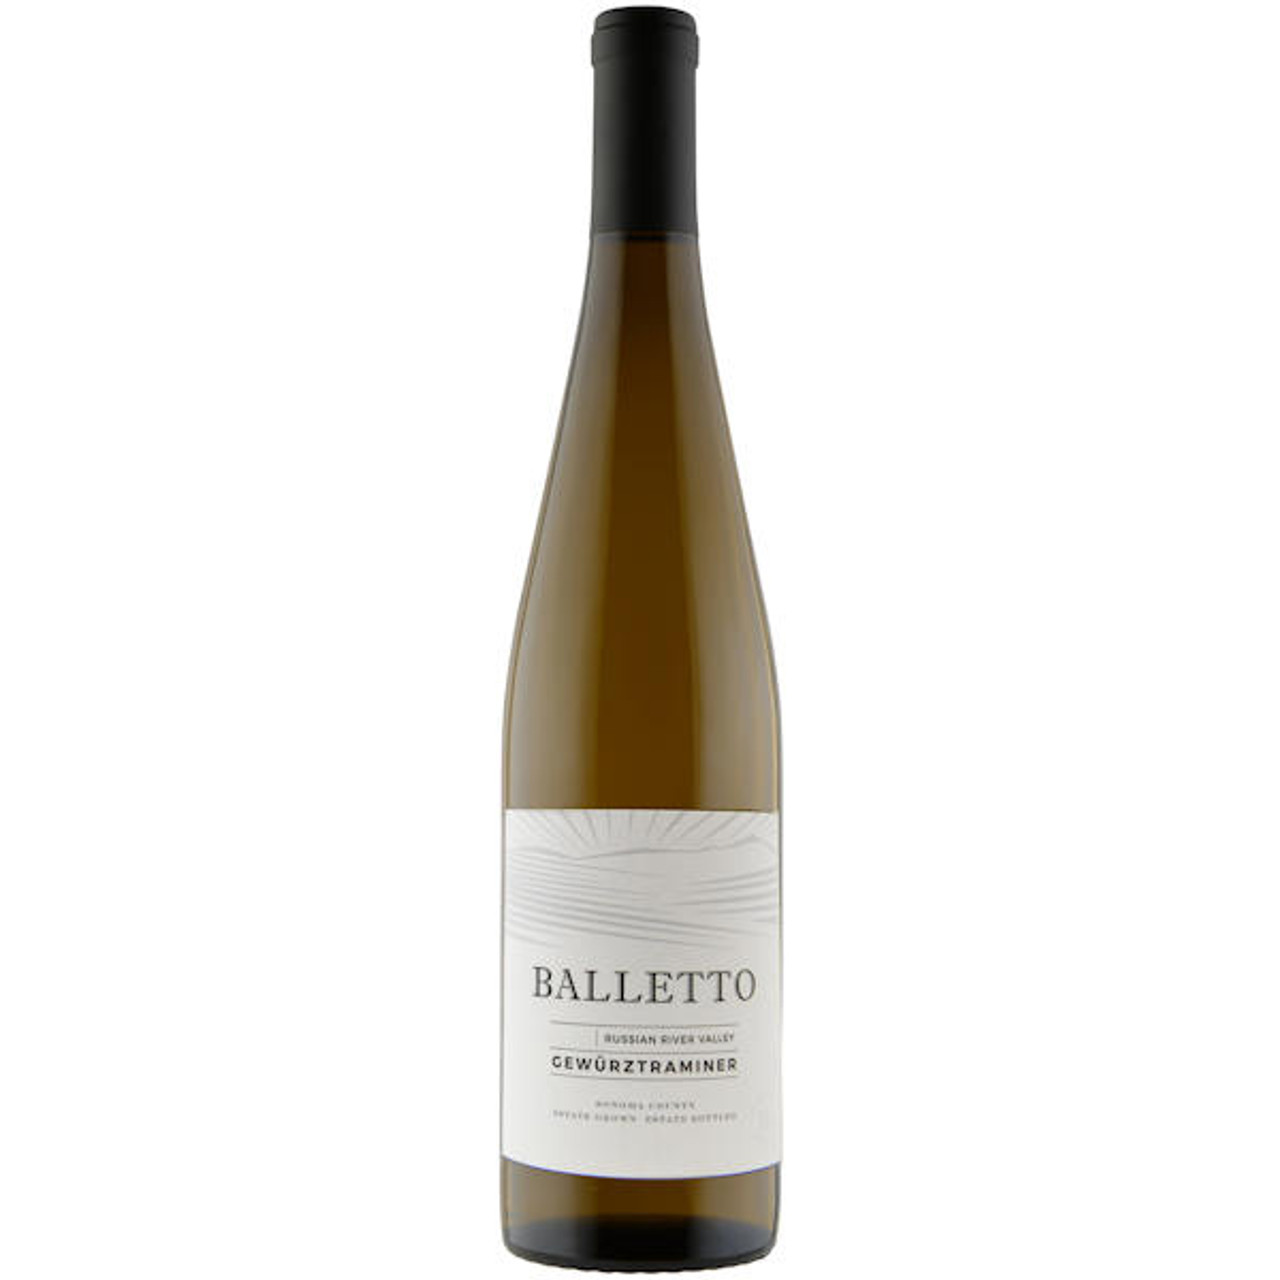 Bottle of Balletto Vineyards Gewürztraminerwith label visible